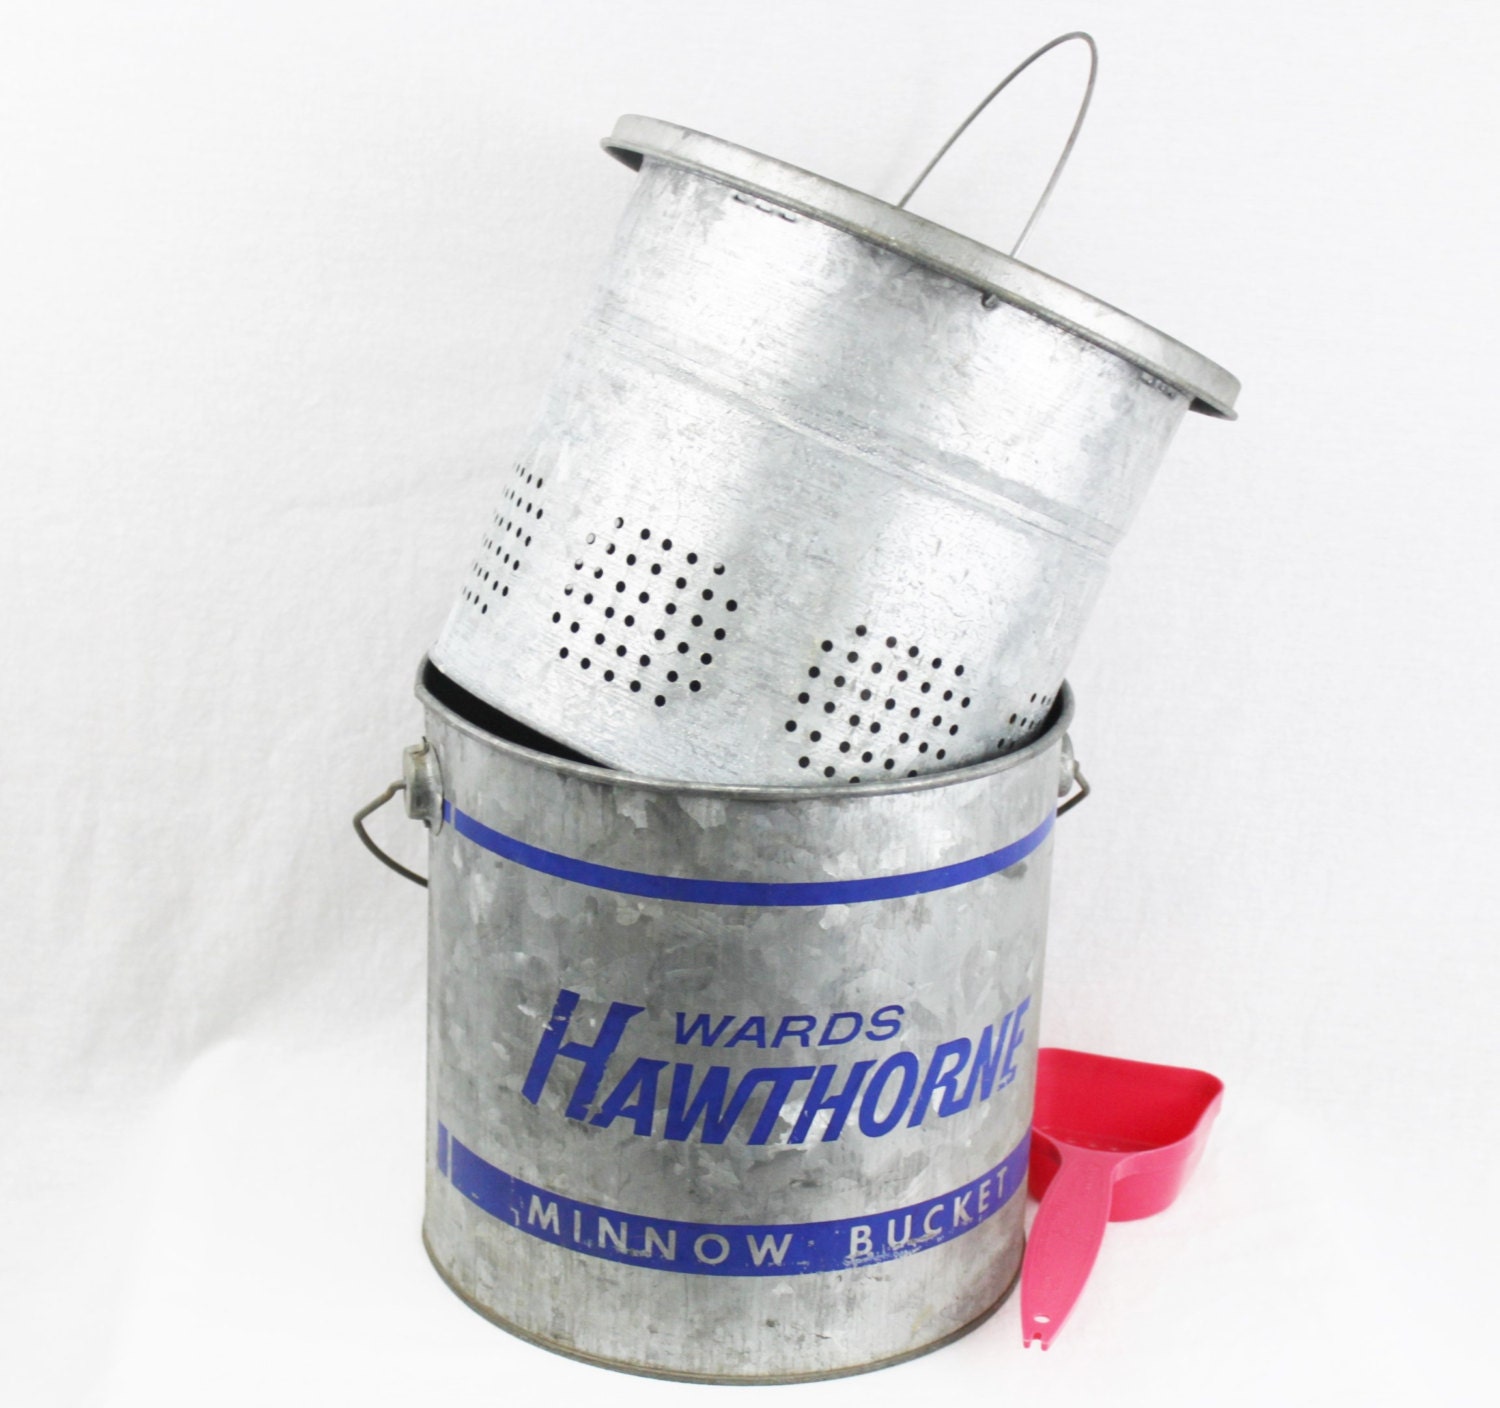 Vintage 1950s Hawthorne Galvanized Steel Minnow Bucket, Fishing